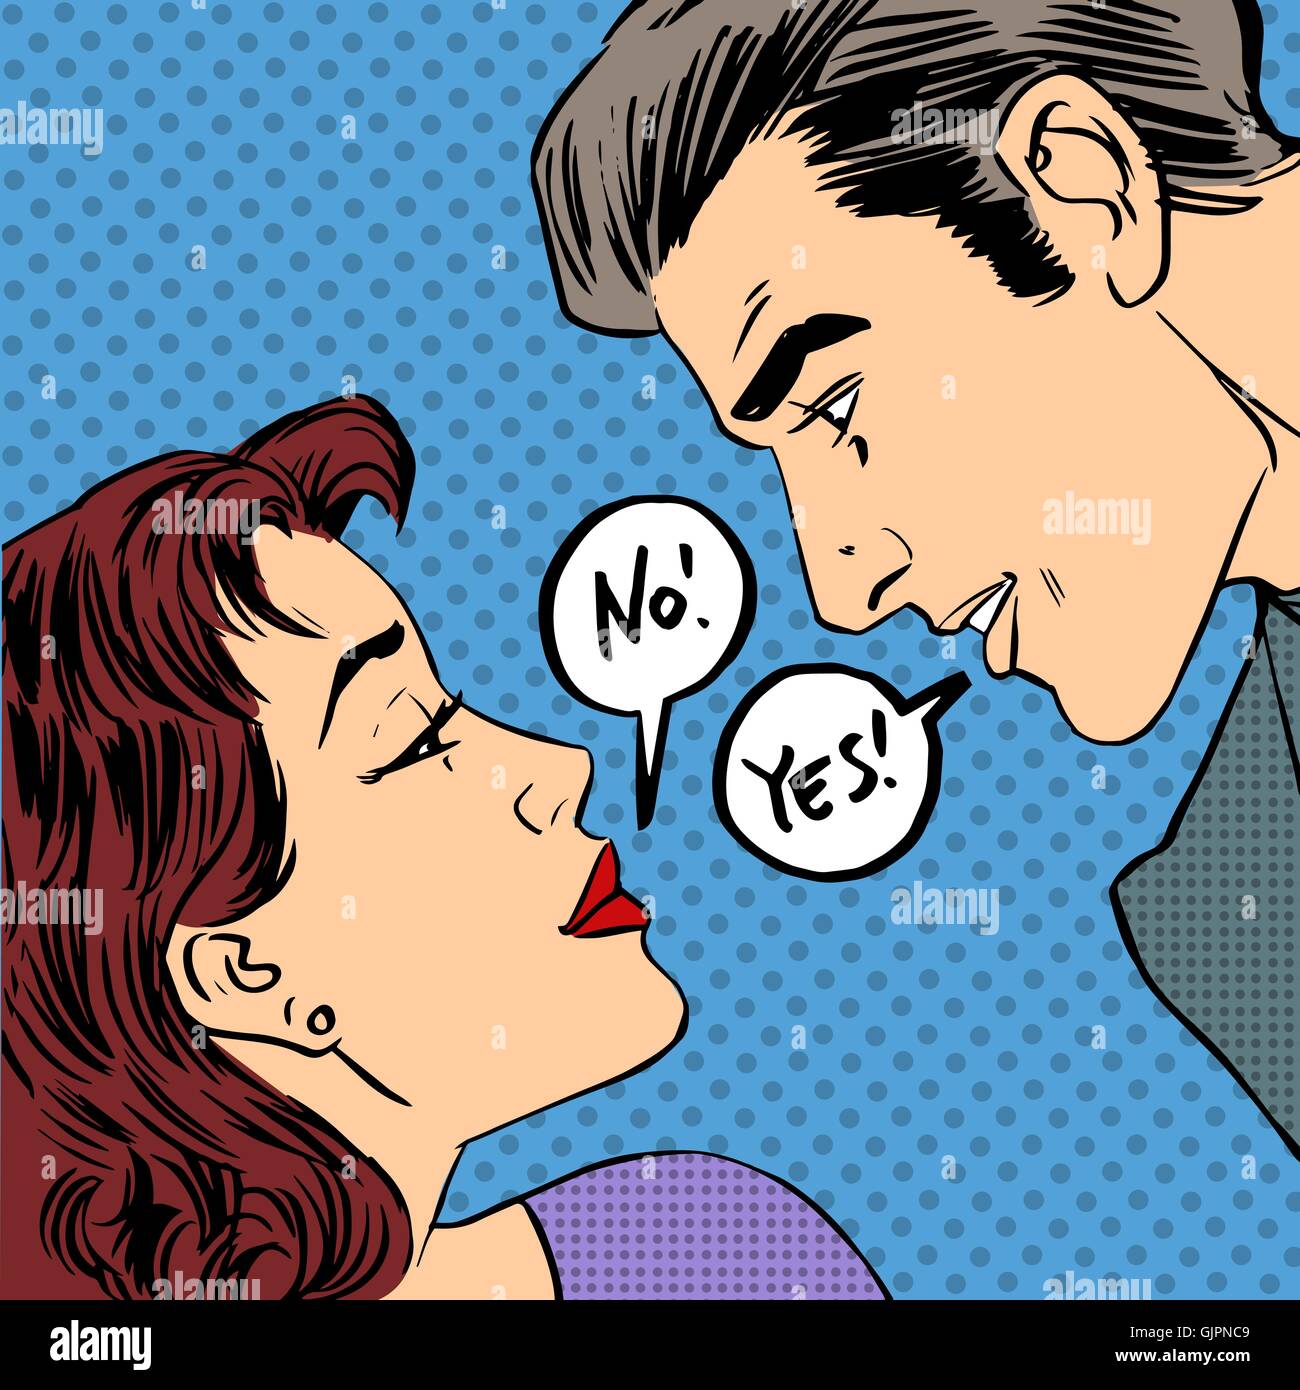 https://c8.alamy.com/comp/GJPNC9/dispute-men-and-women-no-yes-pop-art-comics-retro-style-halftone-GJPNC9.jpg